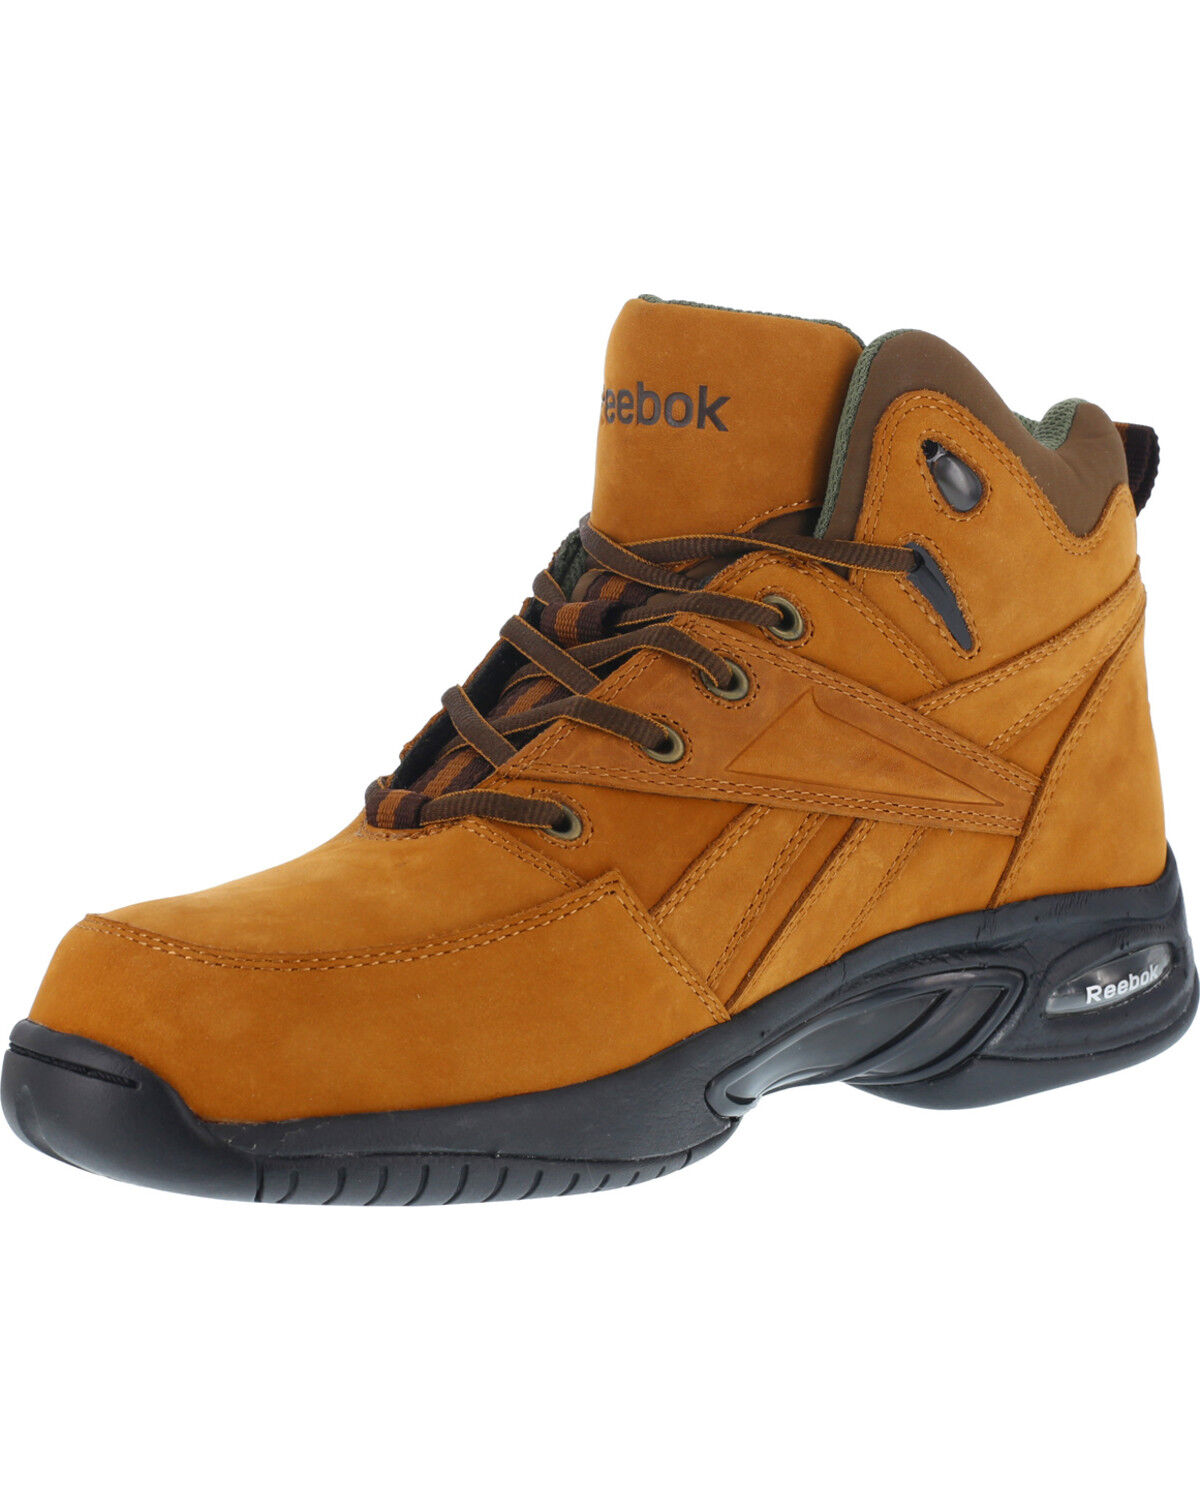 reebok composite toe hiking boots